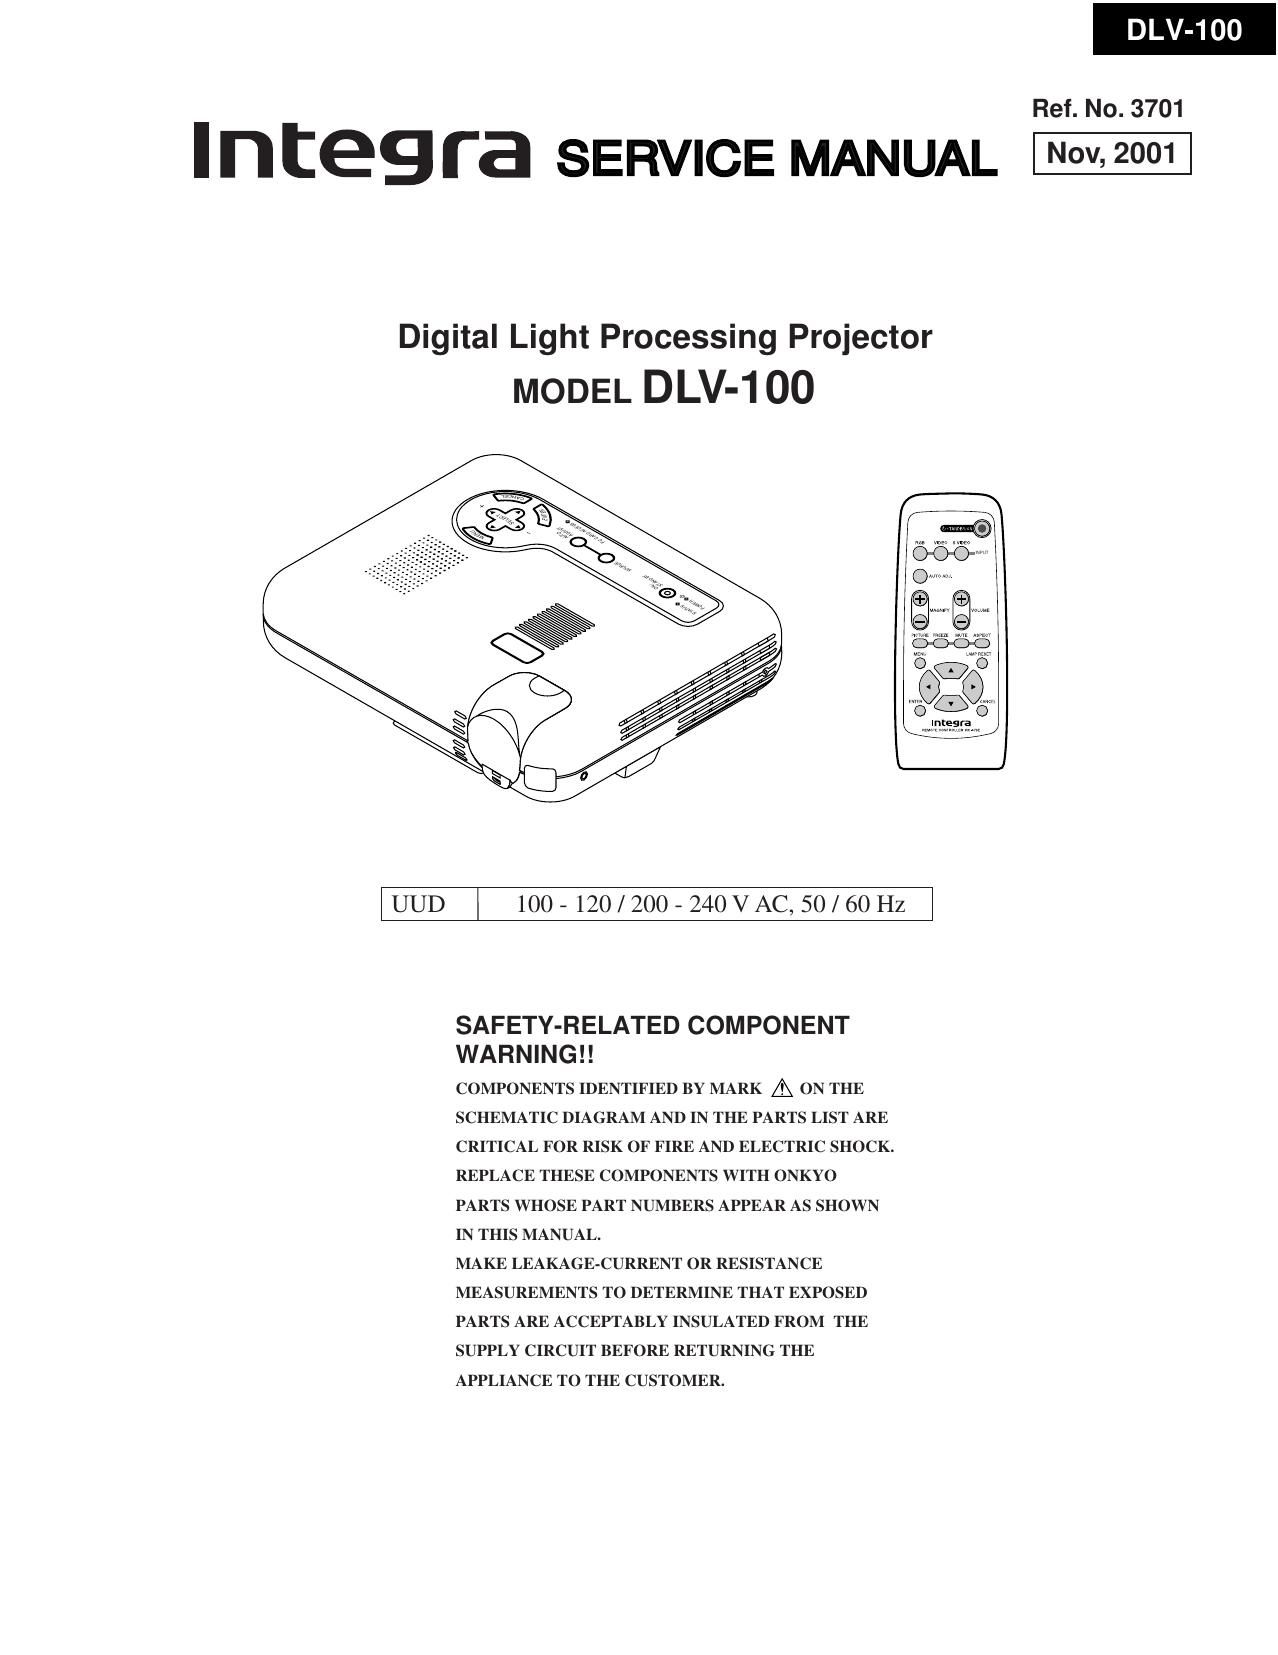 Onkyo DVL 100 Service Manual